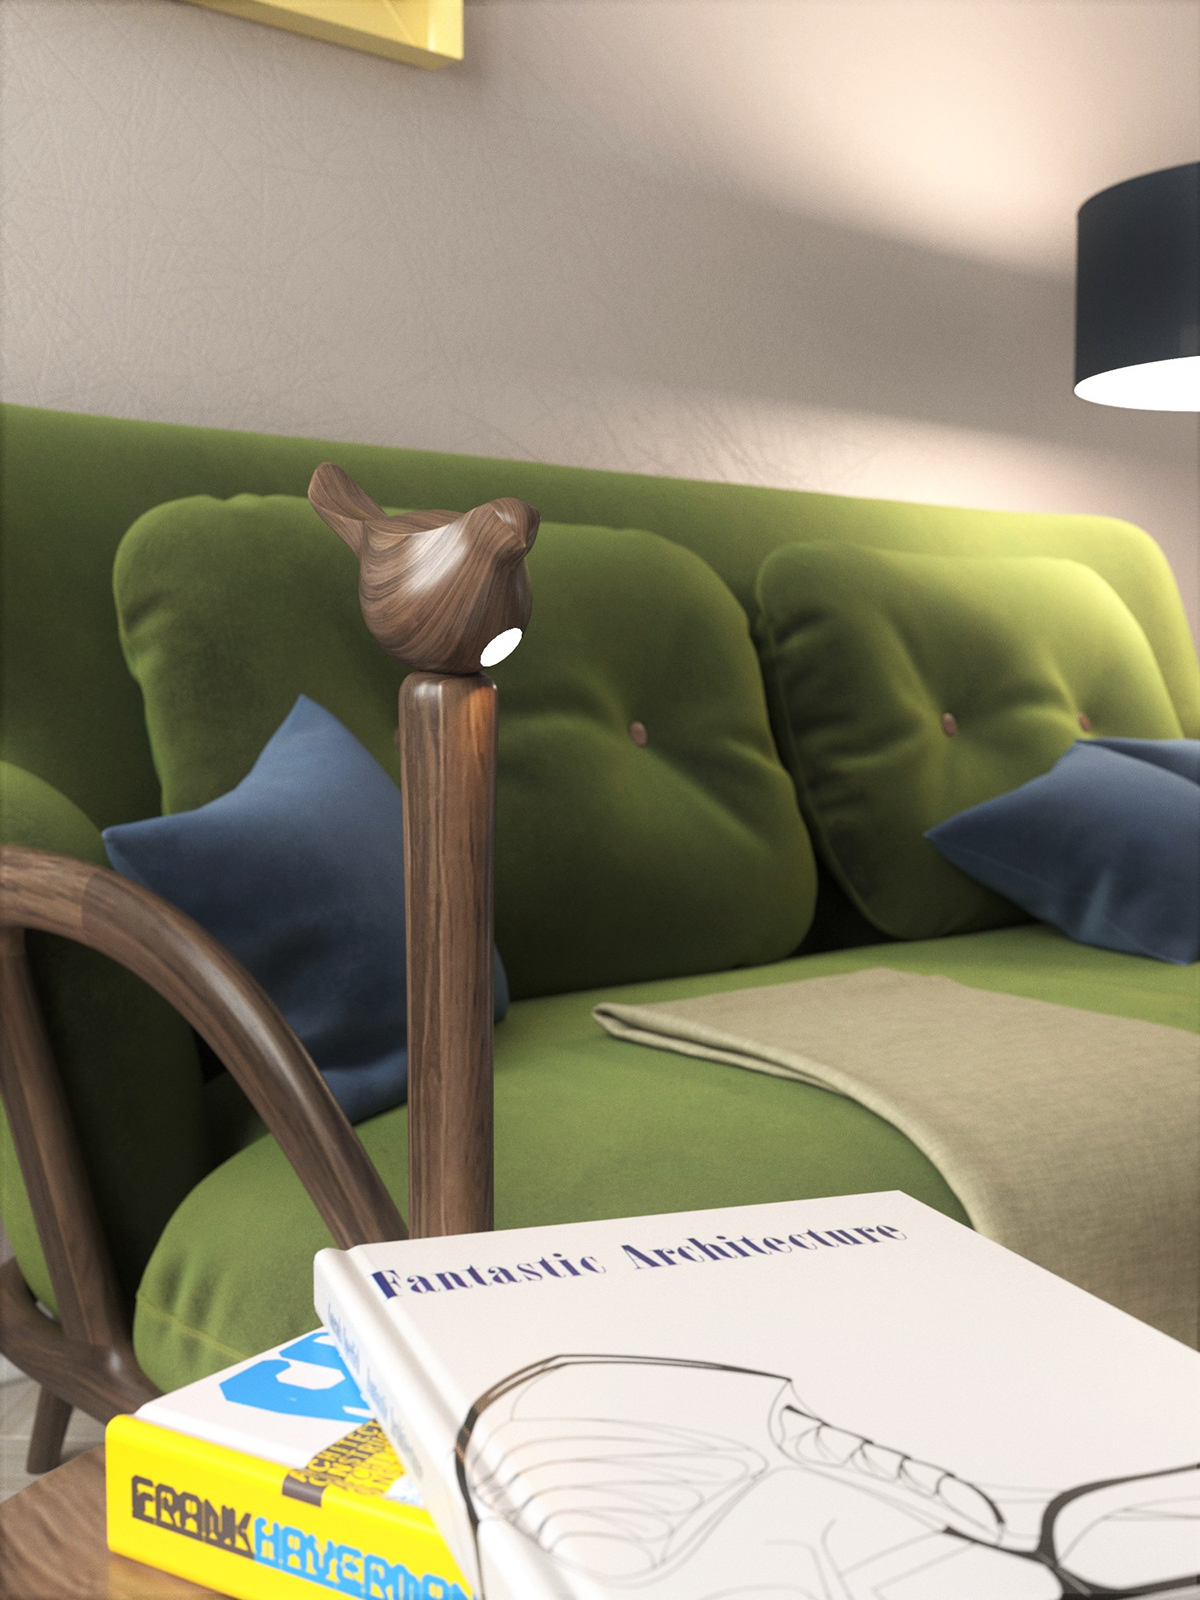 3ds max archviz CGI furniture Interior living room Porada Render visualization wood